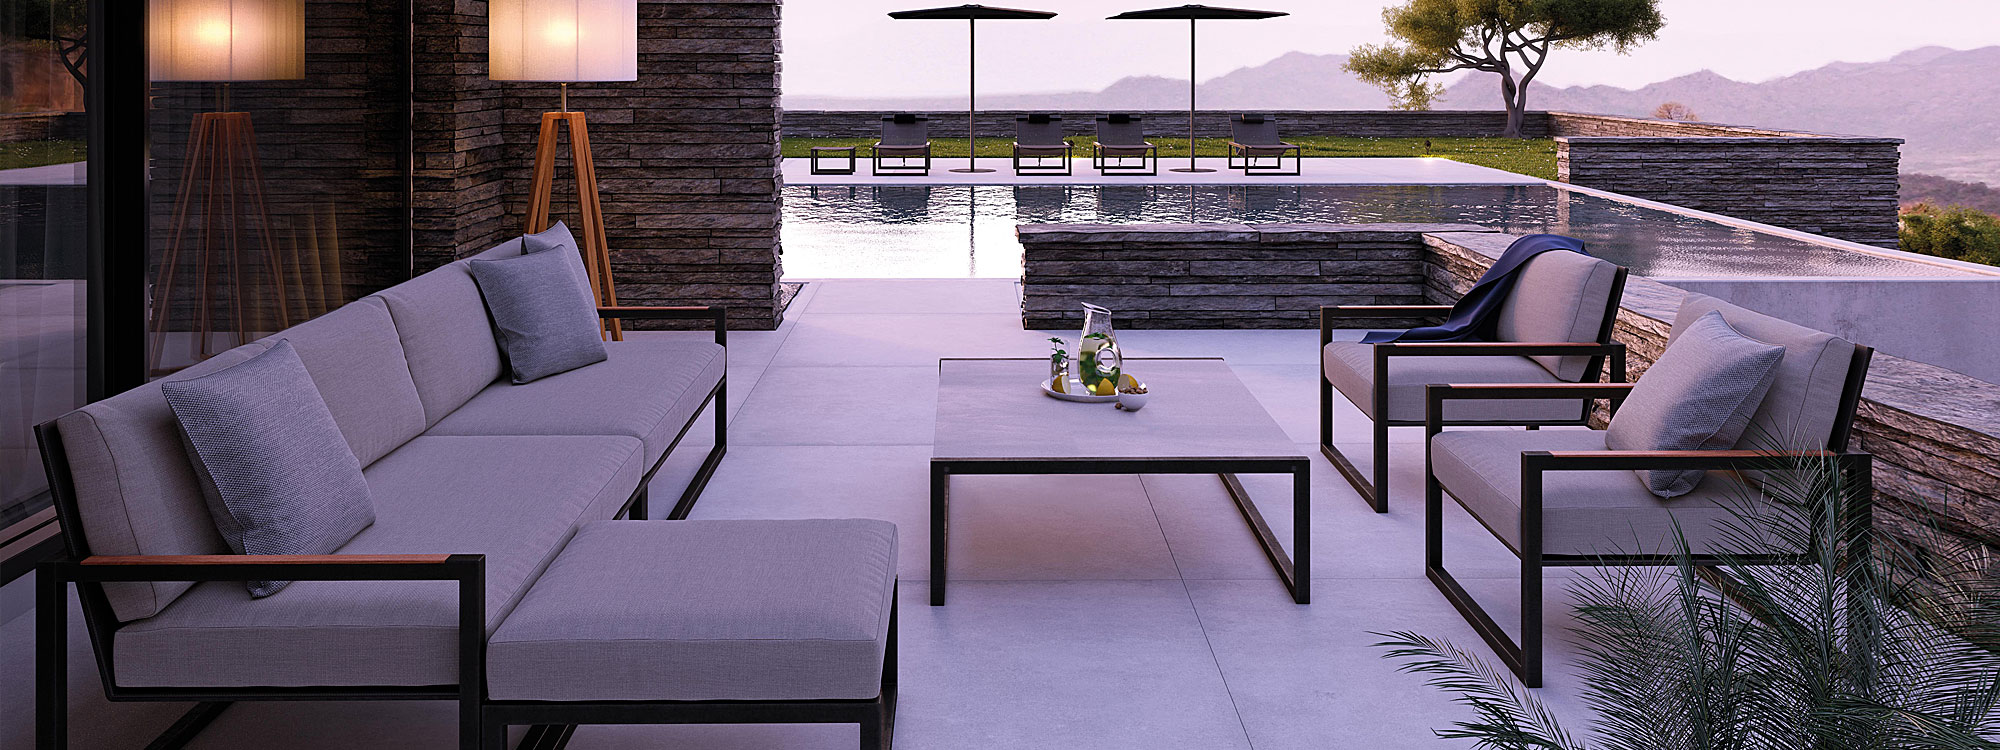 Royal Botania Ninix Lounge furniture model outdoor setting.jpg